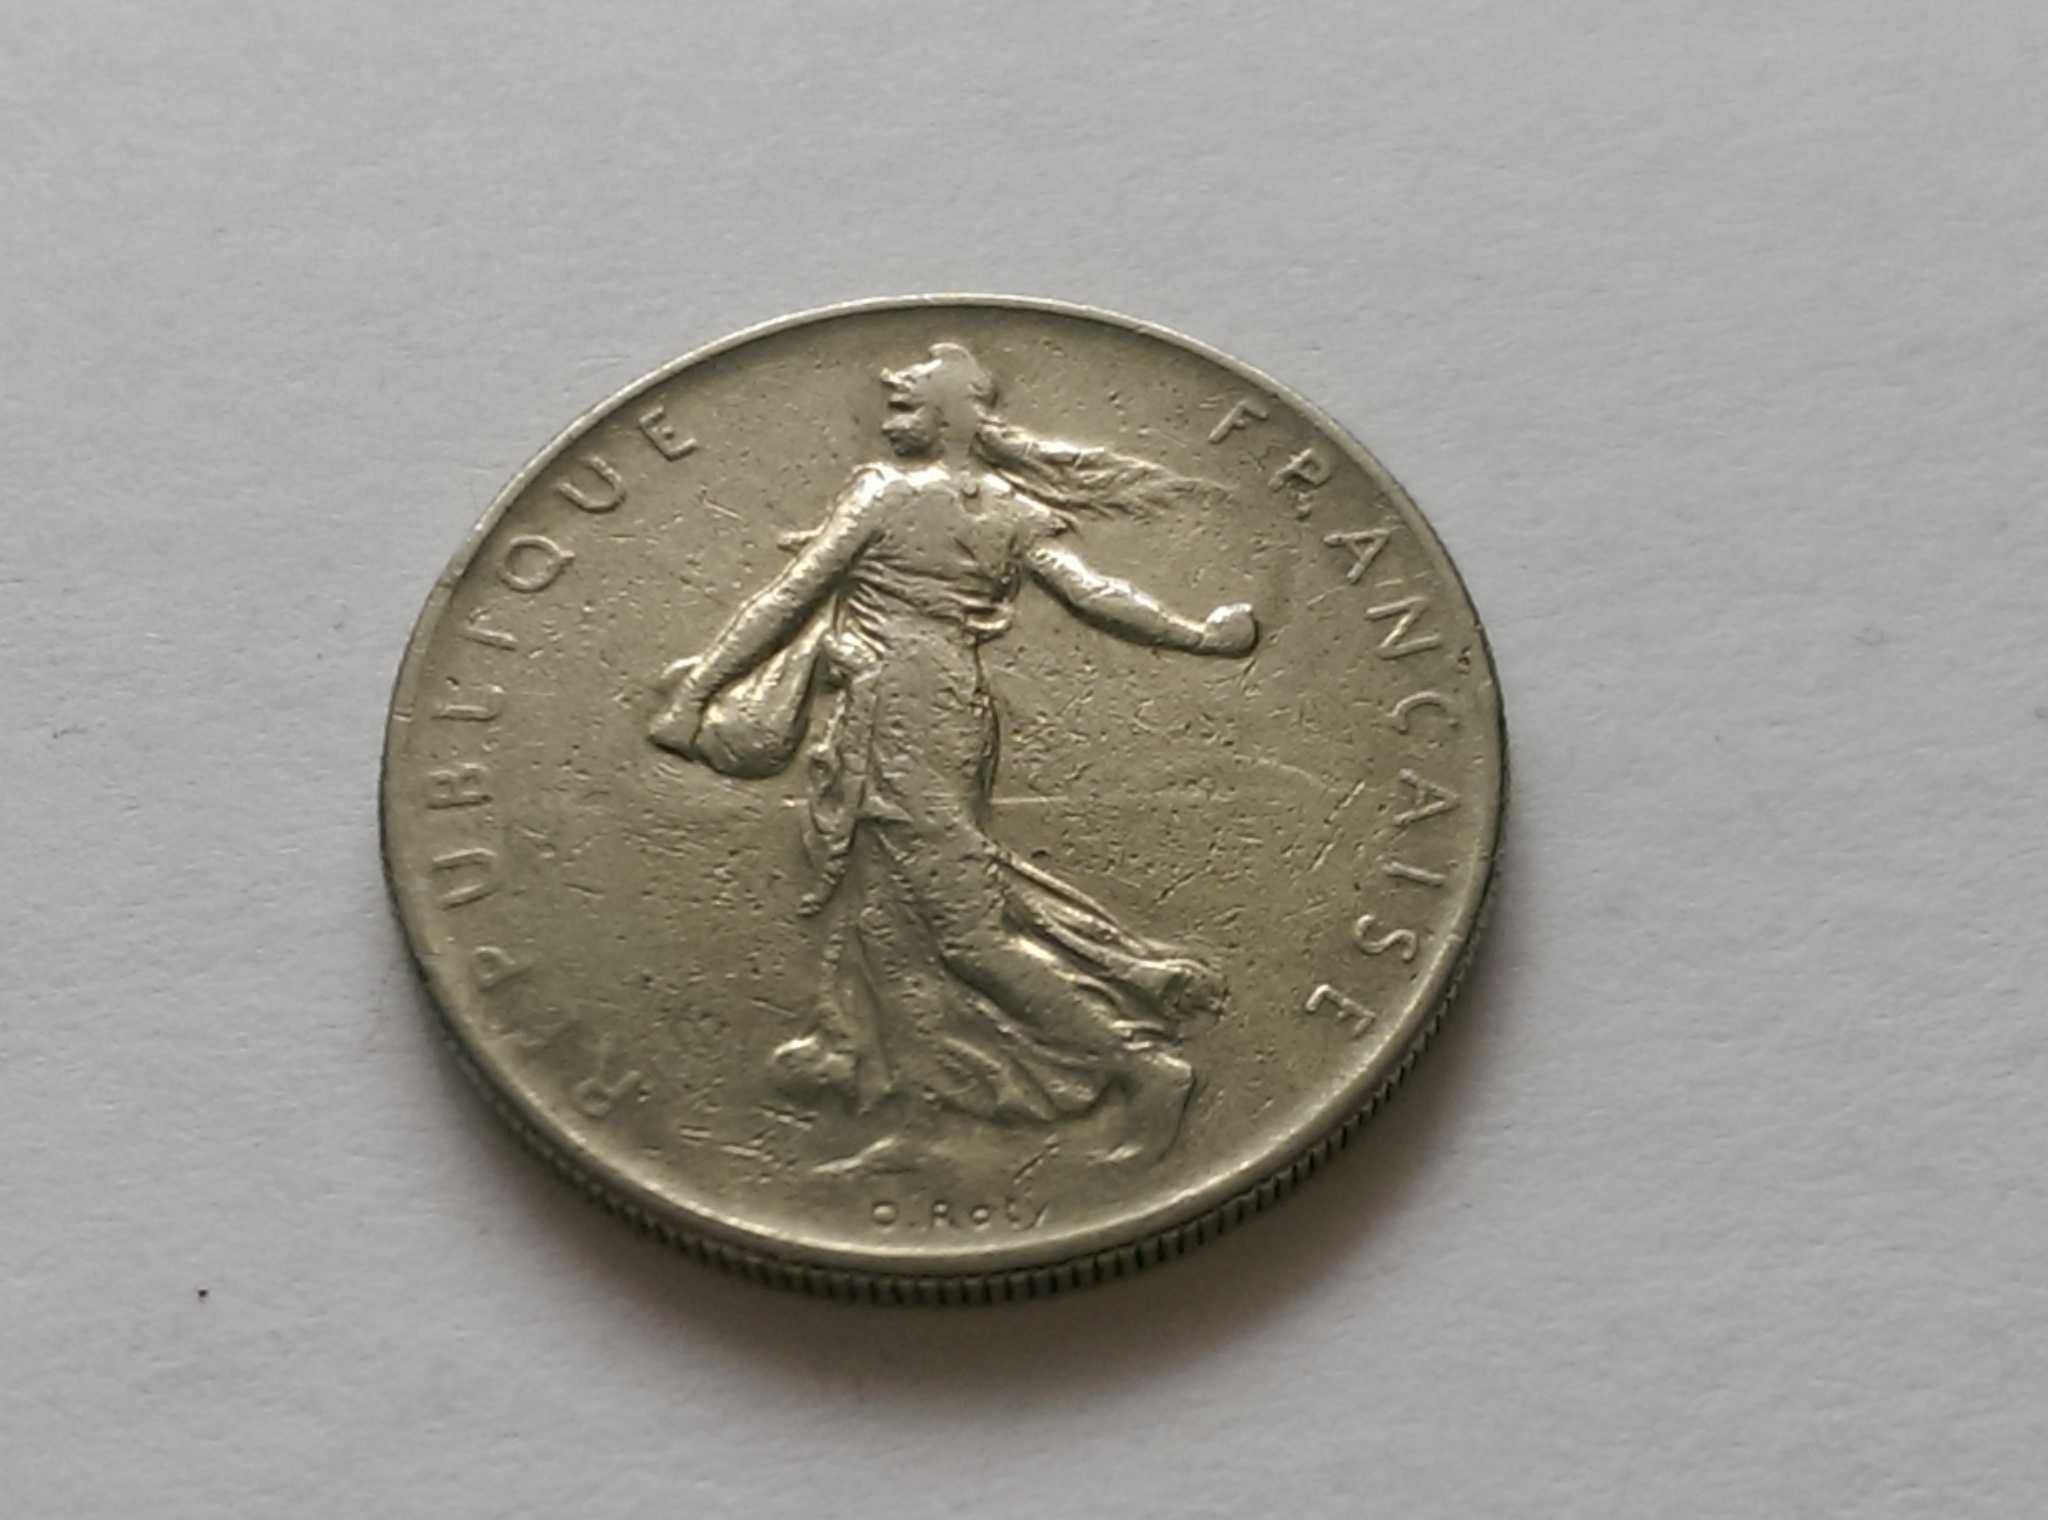 1 Franc Francja 1960 moneta Krk